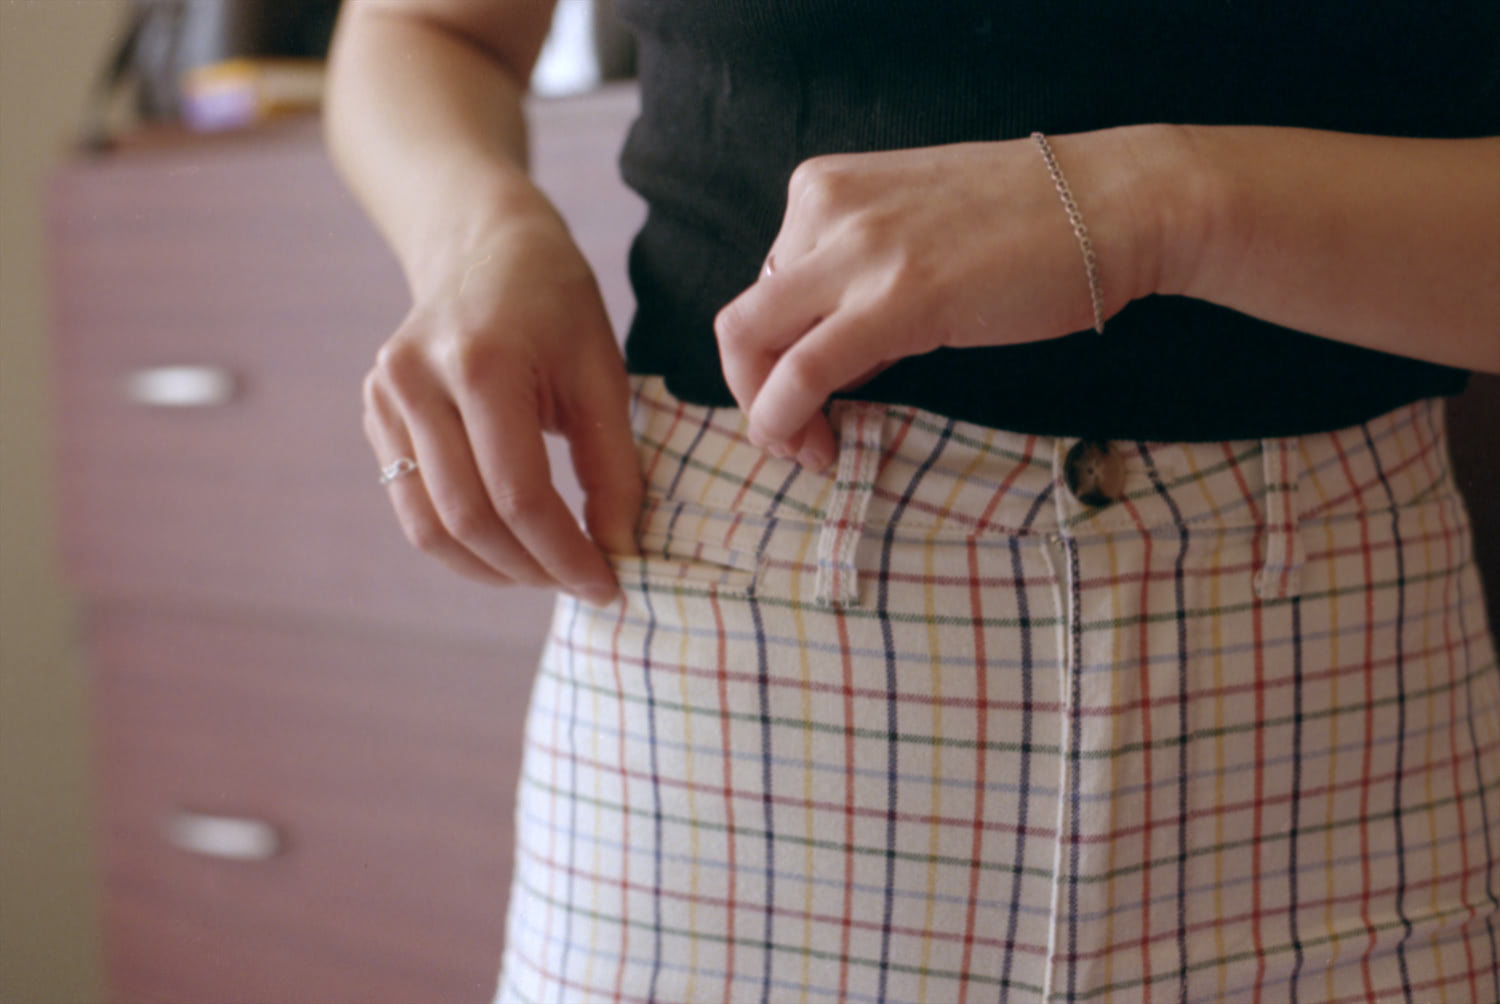 Image of Katie adjusting the pocket on her plaid pants